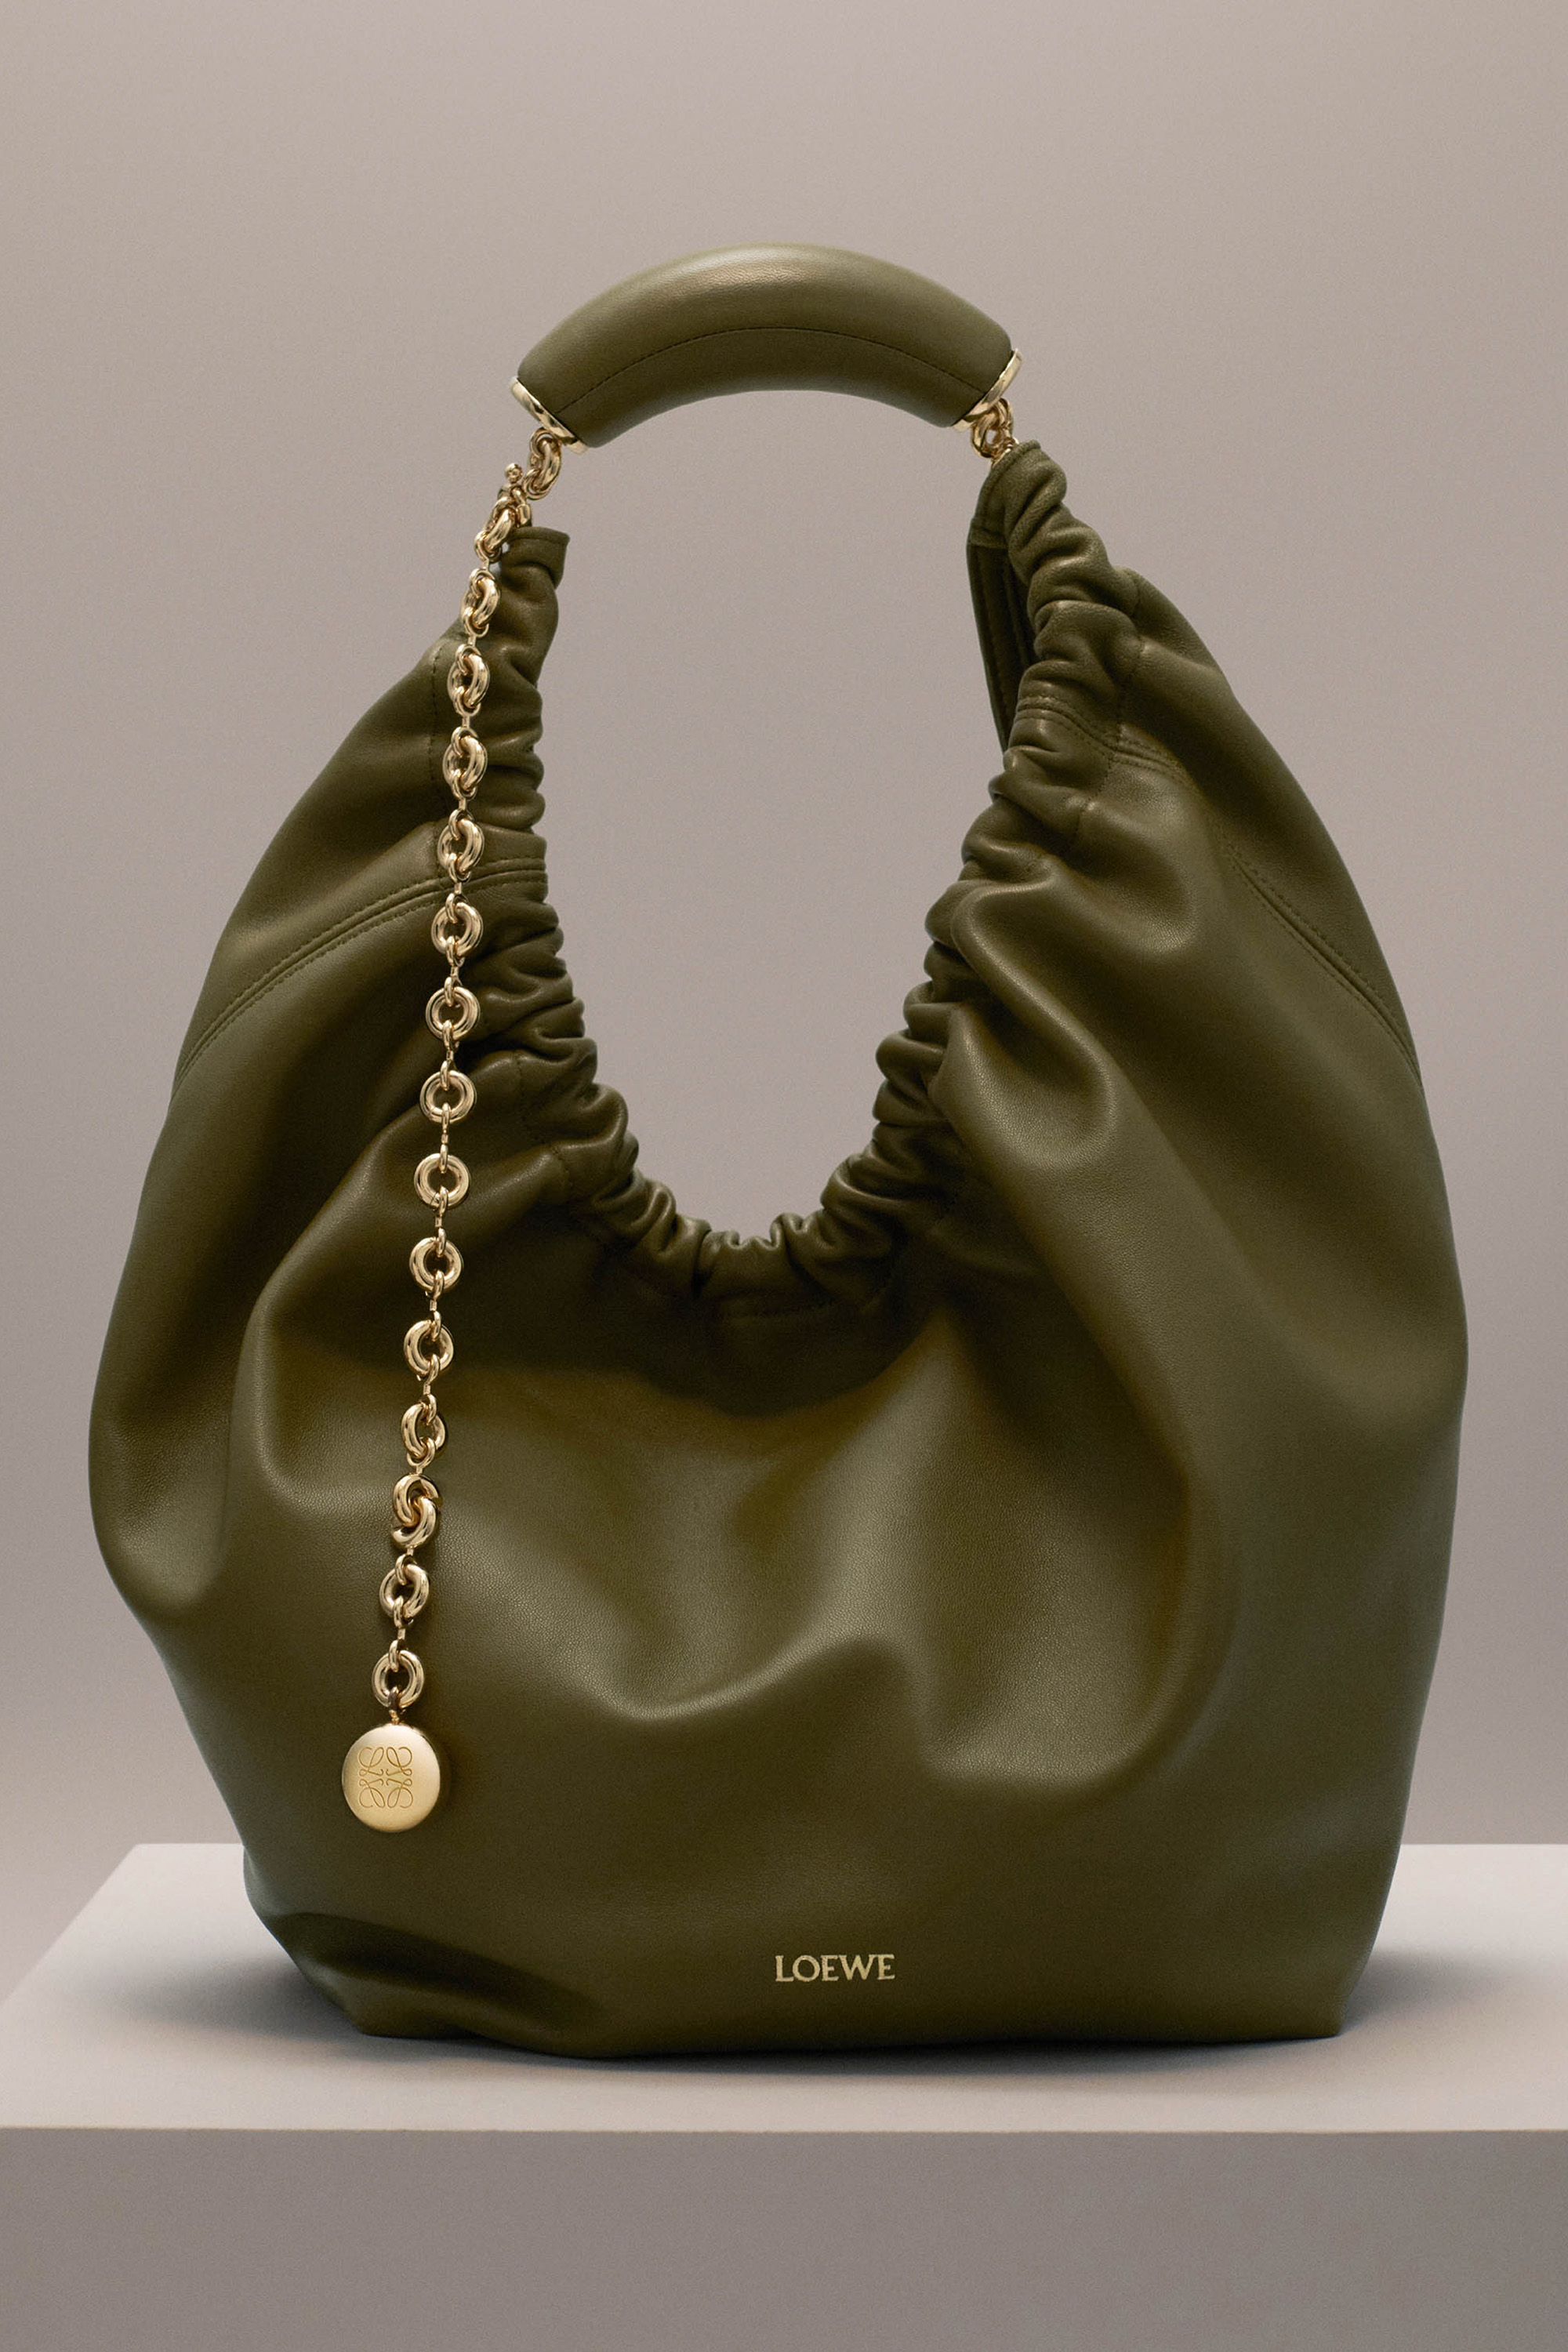 Paseo satchel in shiny nappa calfskin Emerald Green - LOEWE